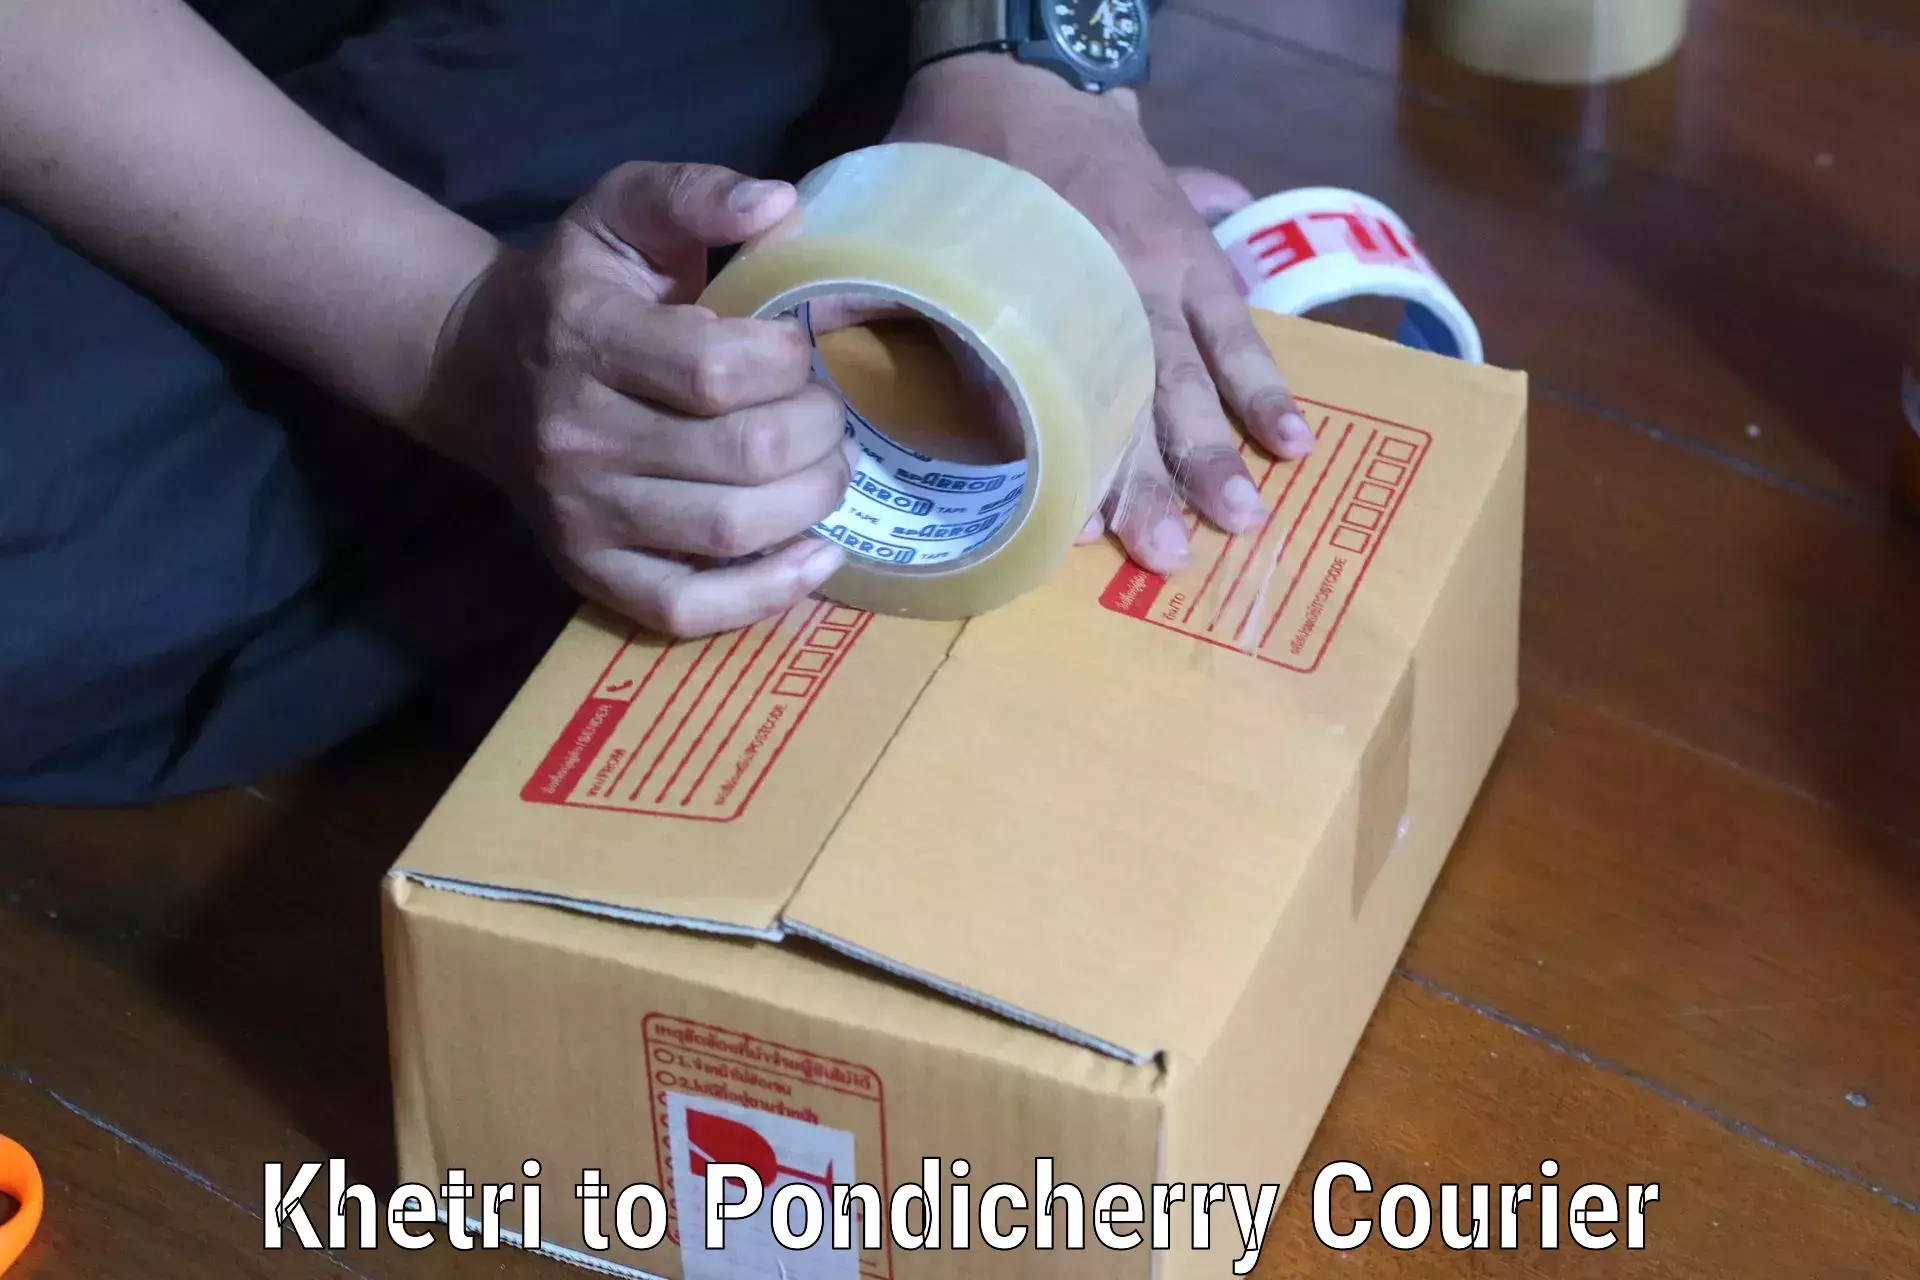 Courier service partnerships Khetri to Pondicherry